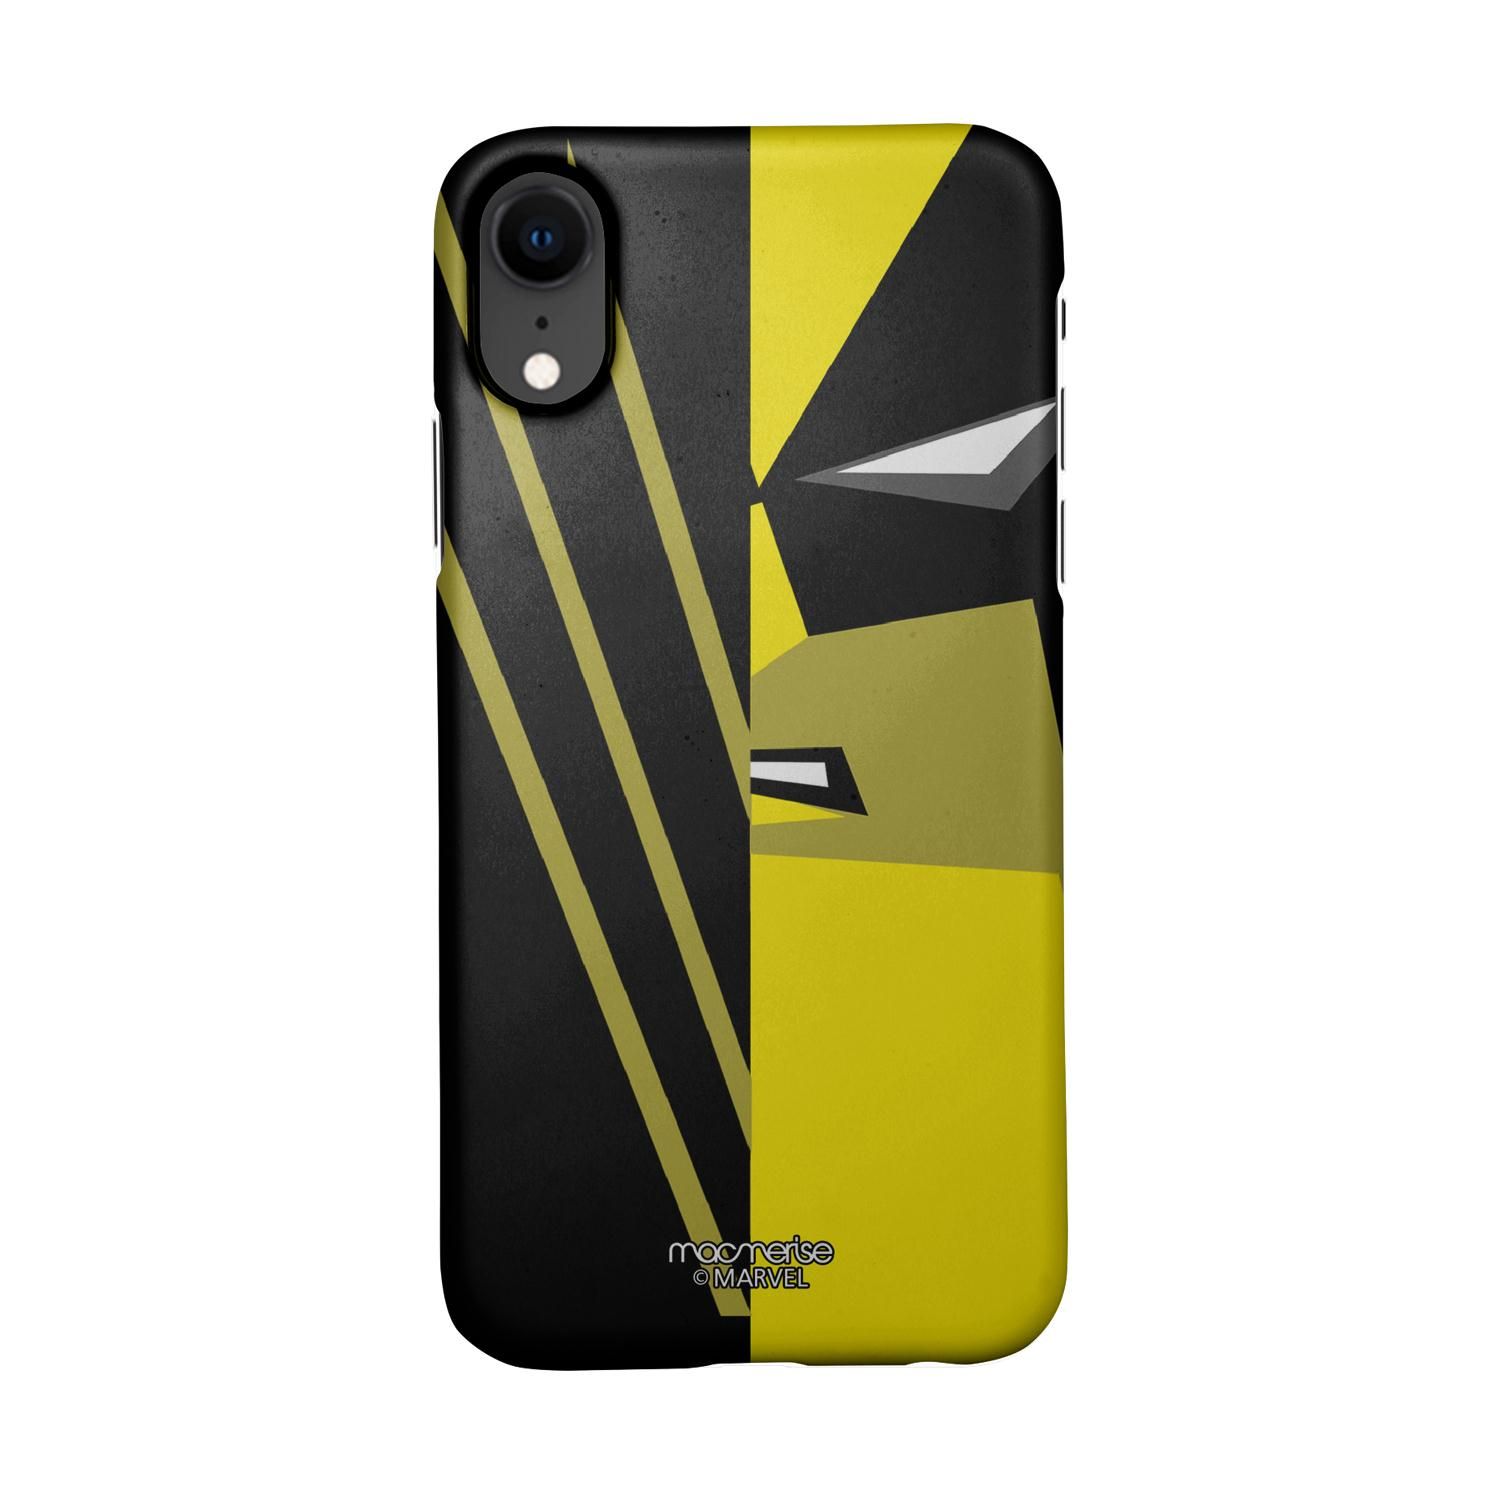 Buy Face Focus Wolverine - Sleek Phone Case for iPhone XR Online